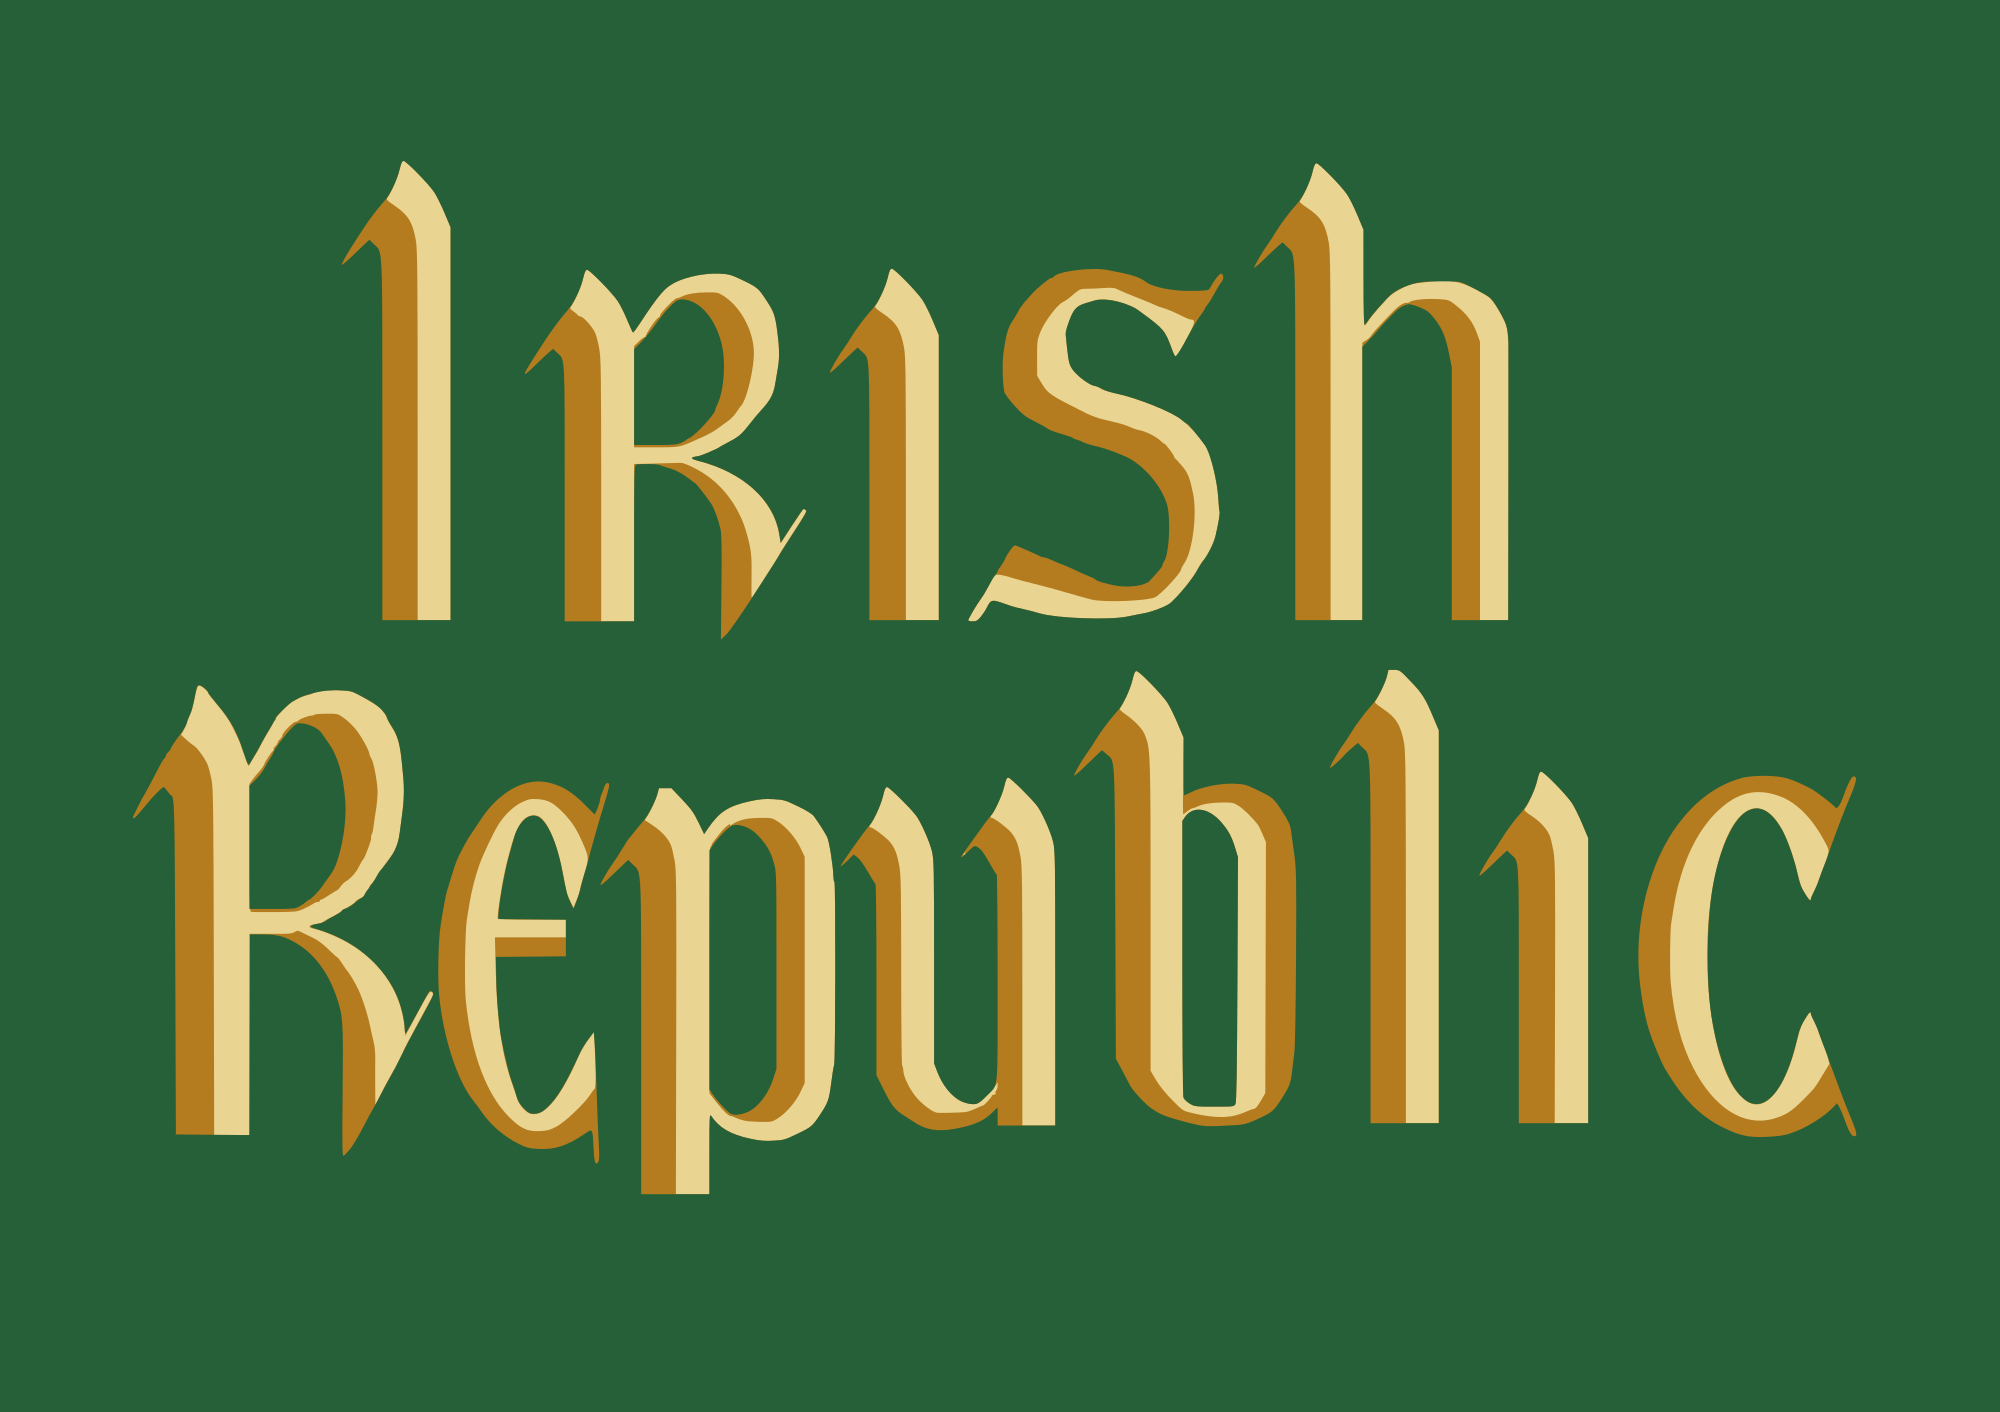 Proclamation of the Irish Republic - Wikipedia, the free encyclopedia